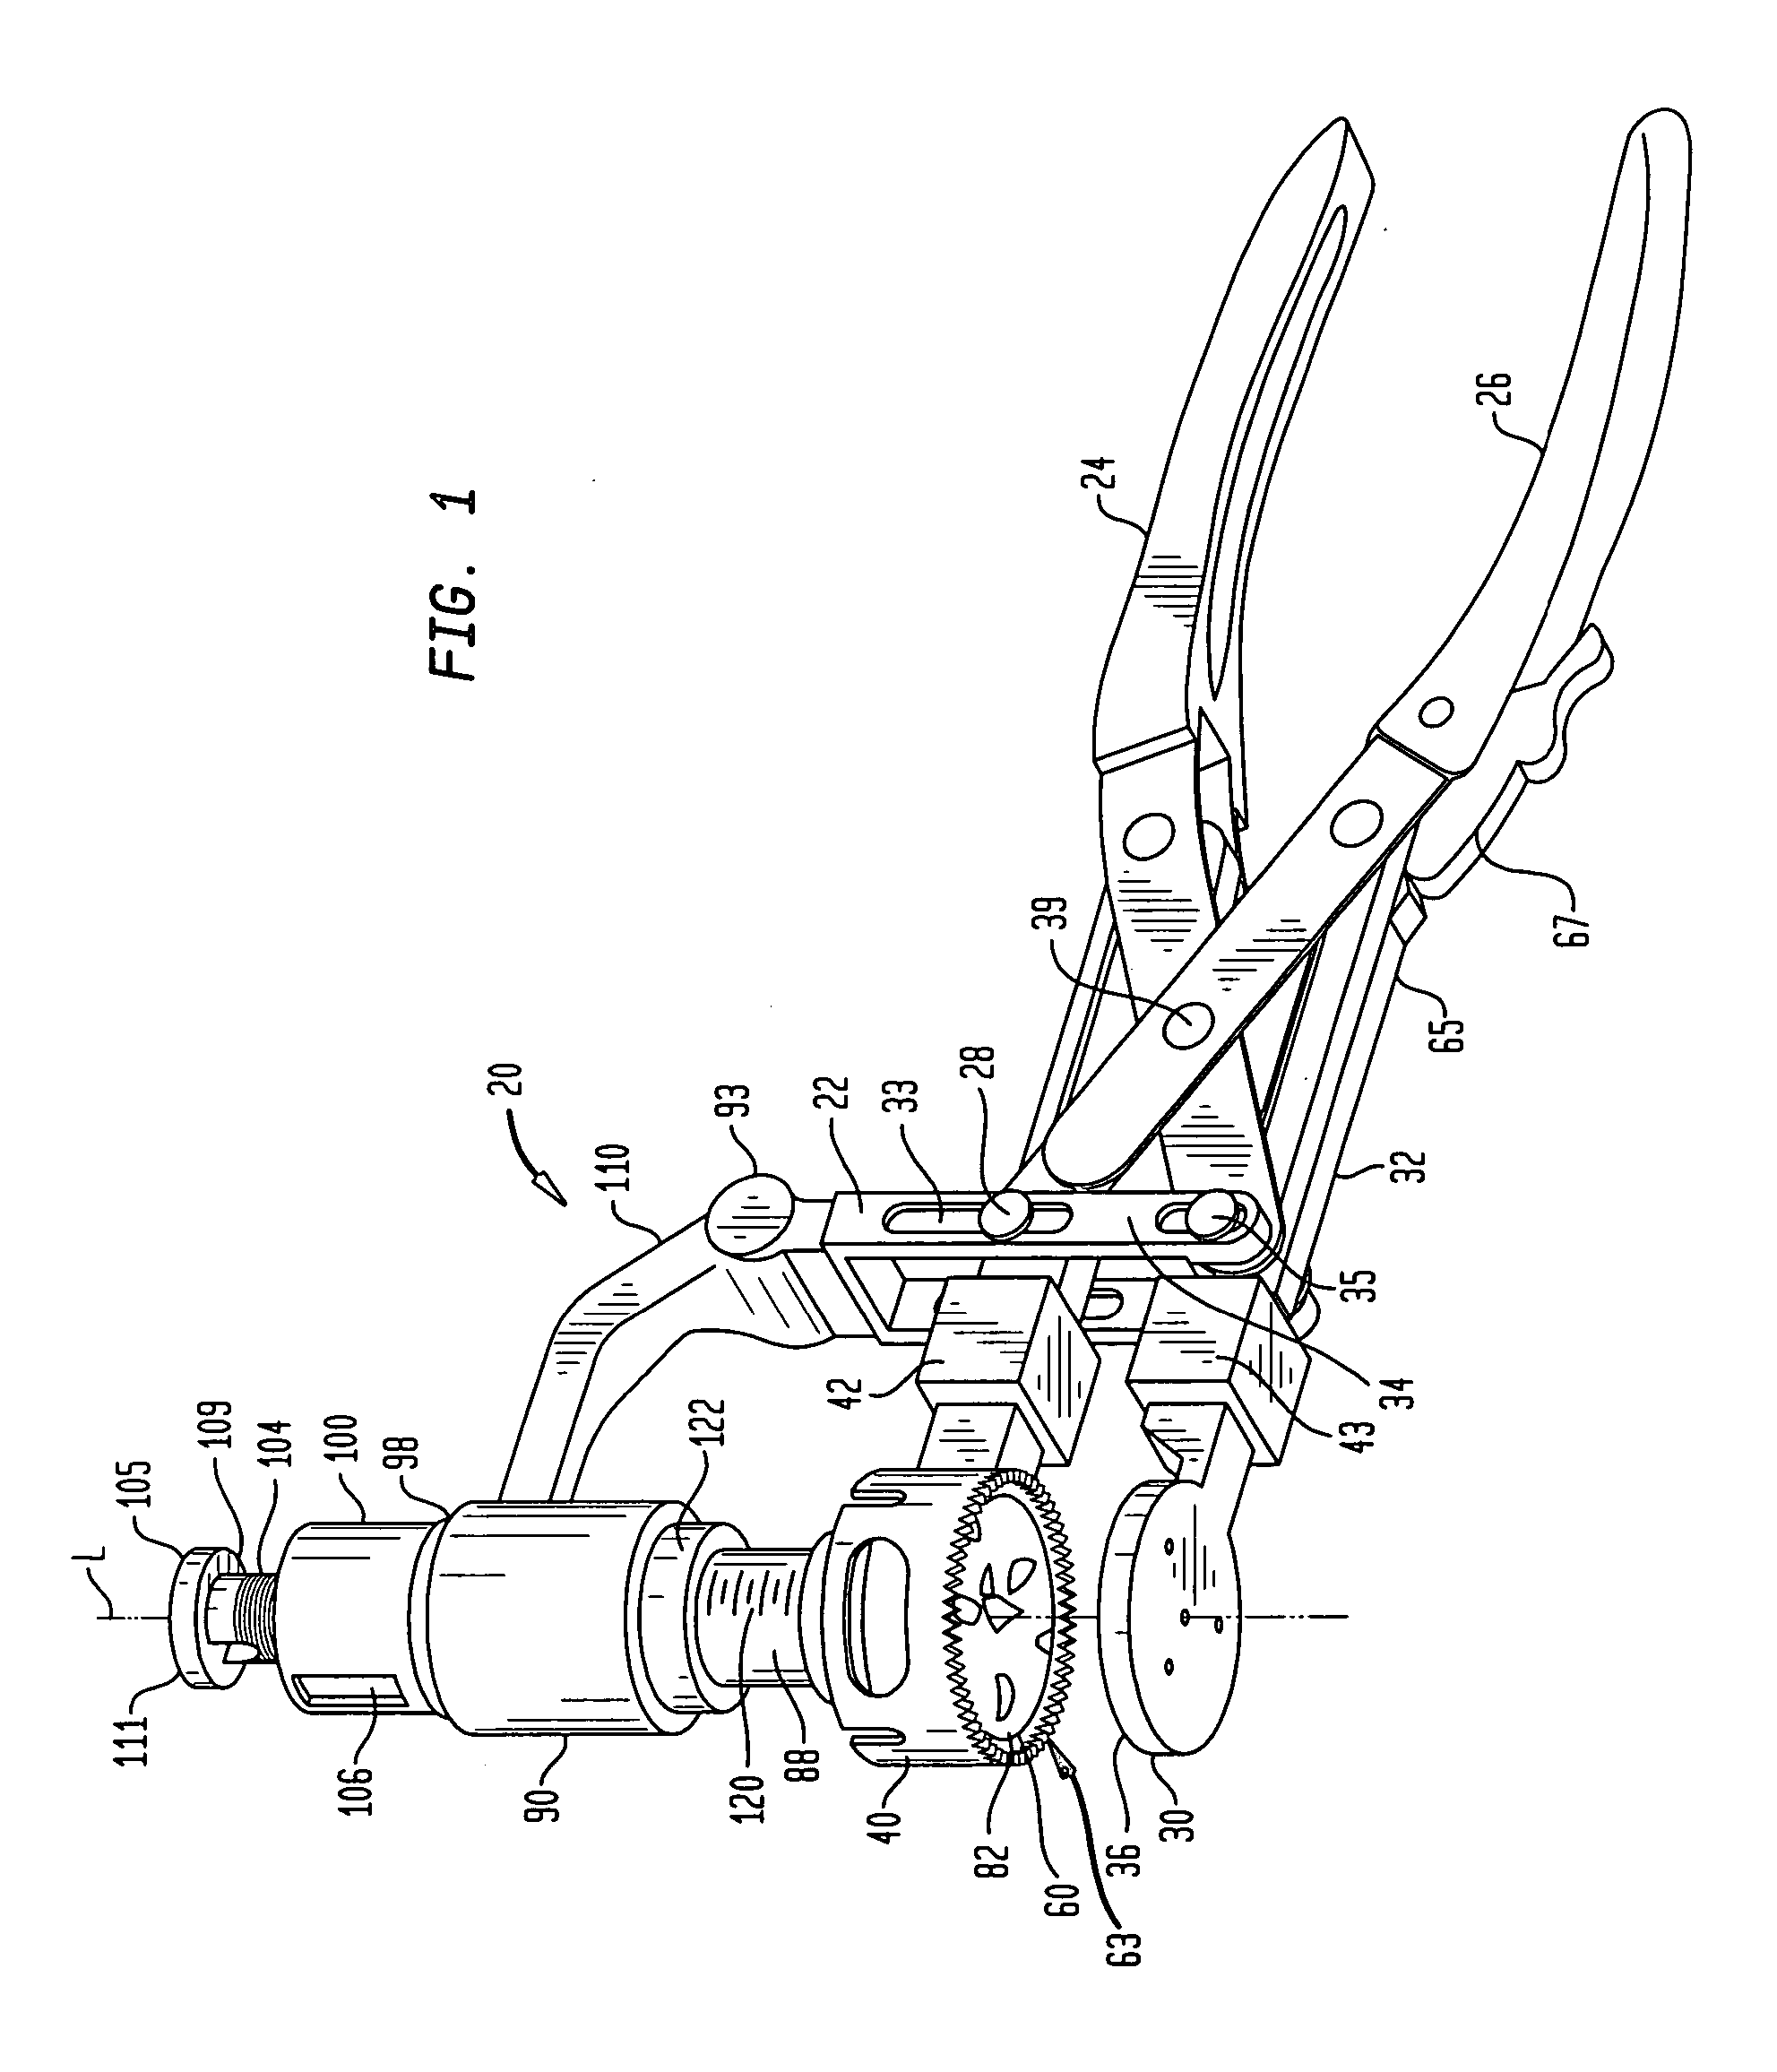 Modular patella instrument